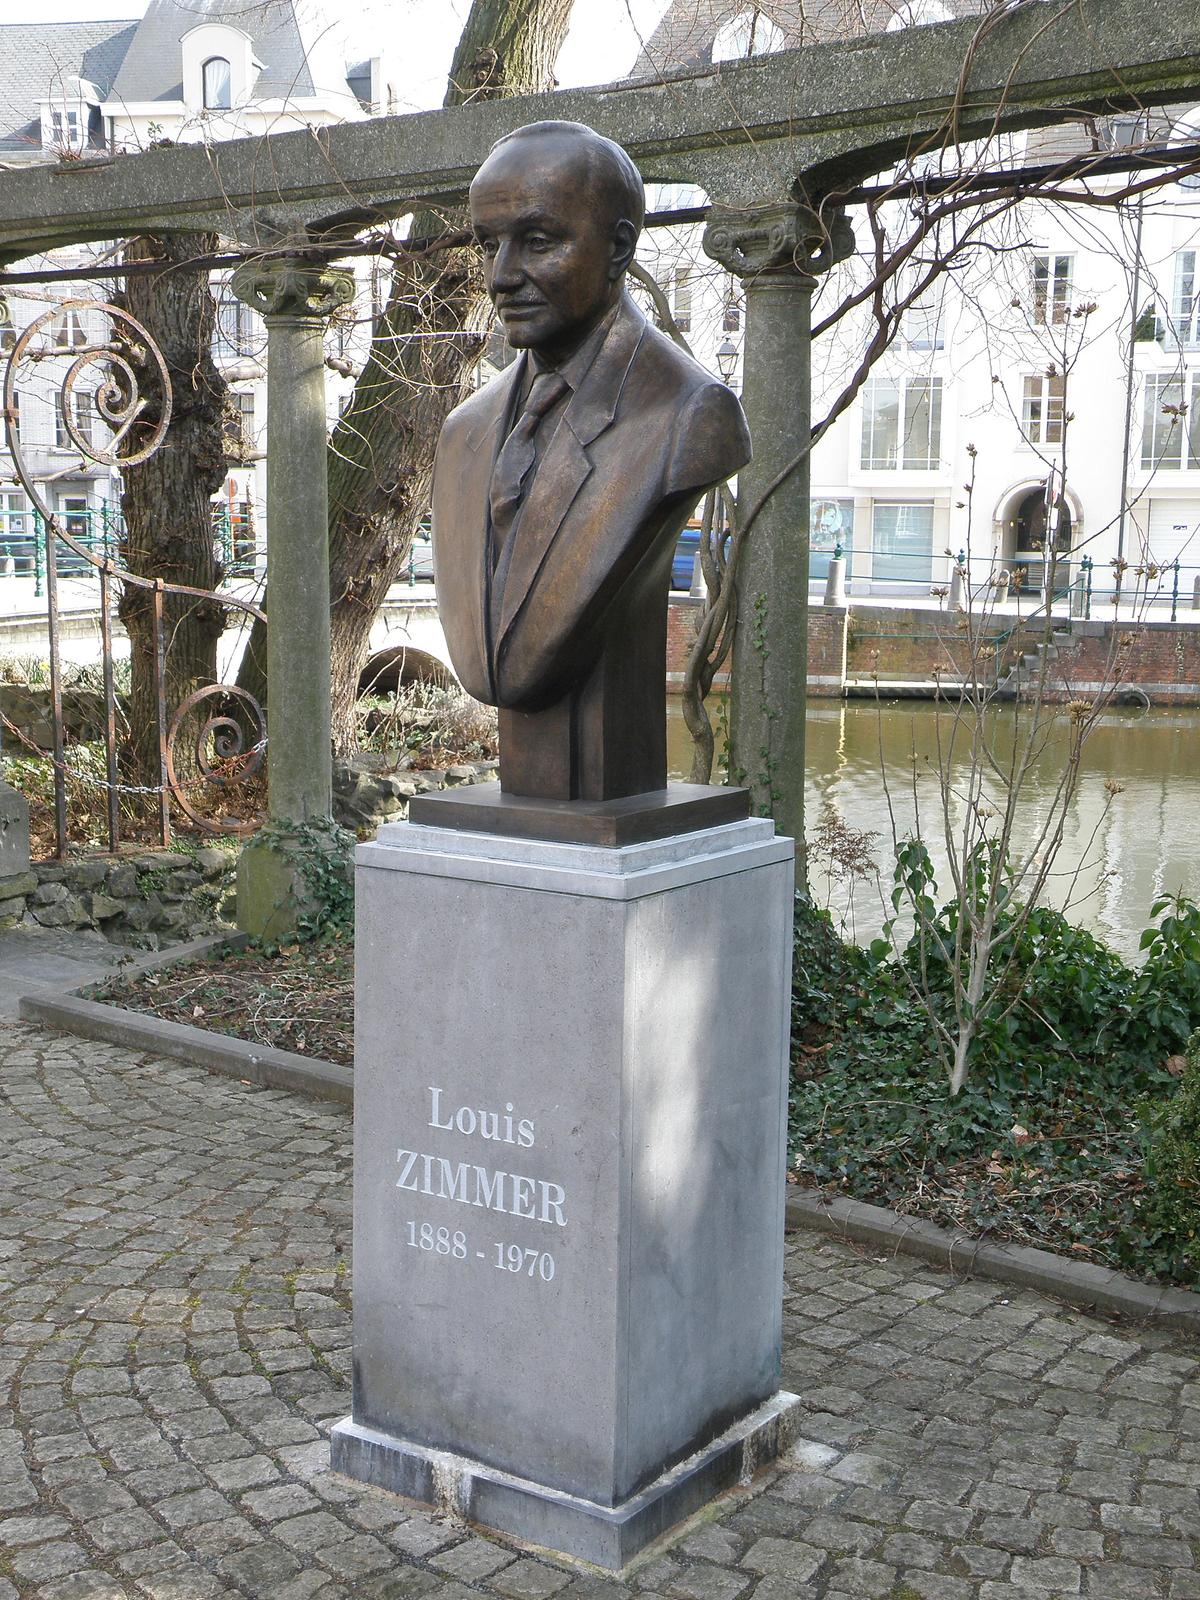 A bust of Louis Zimmer, who created Zimmer tower in Lier, Belgium. (<a href="https://en.wikipedia.org/wiki/File:Louis_Zimmer_standbeeld2.JPG">Public Domain</a>)